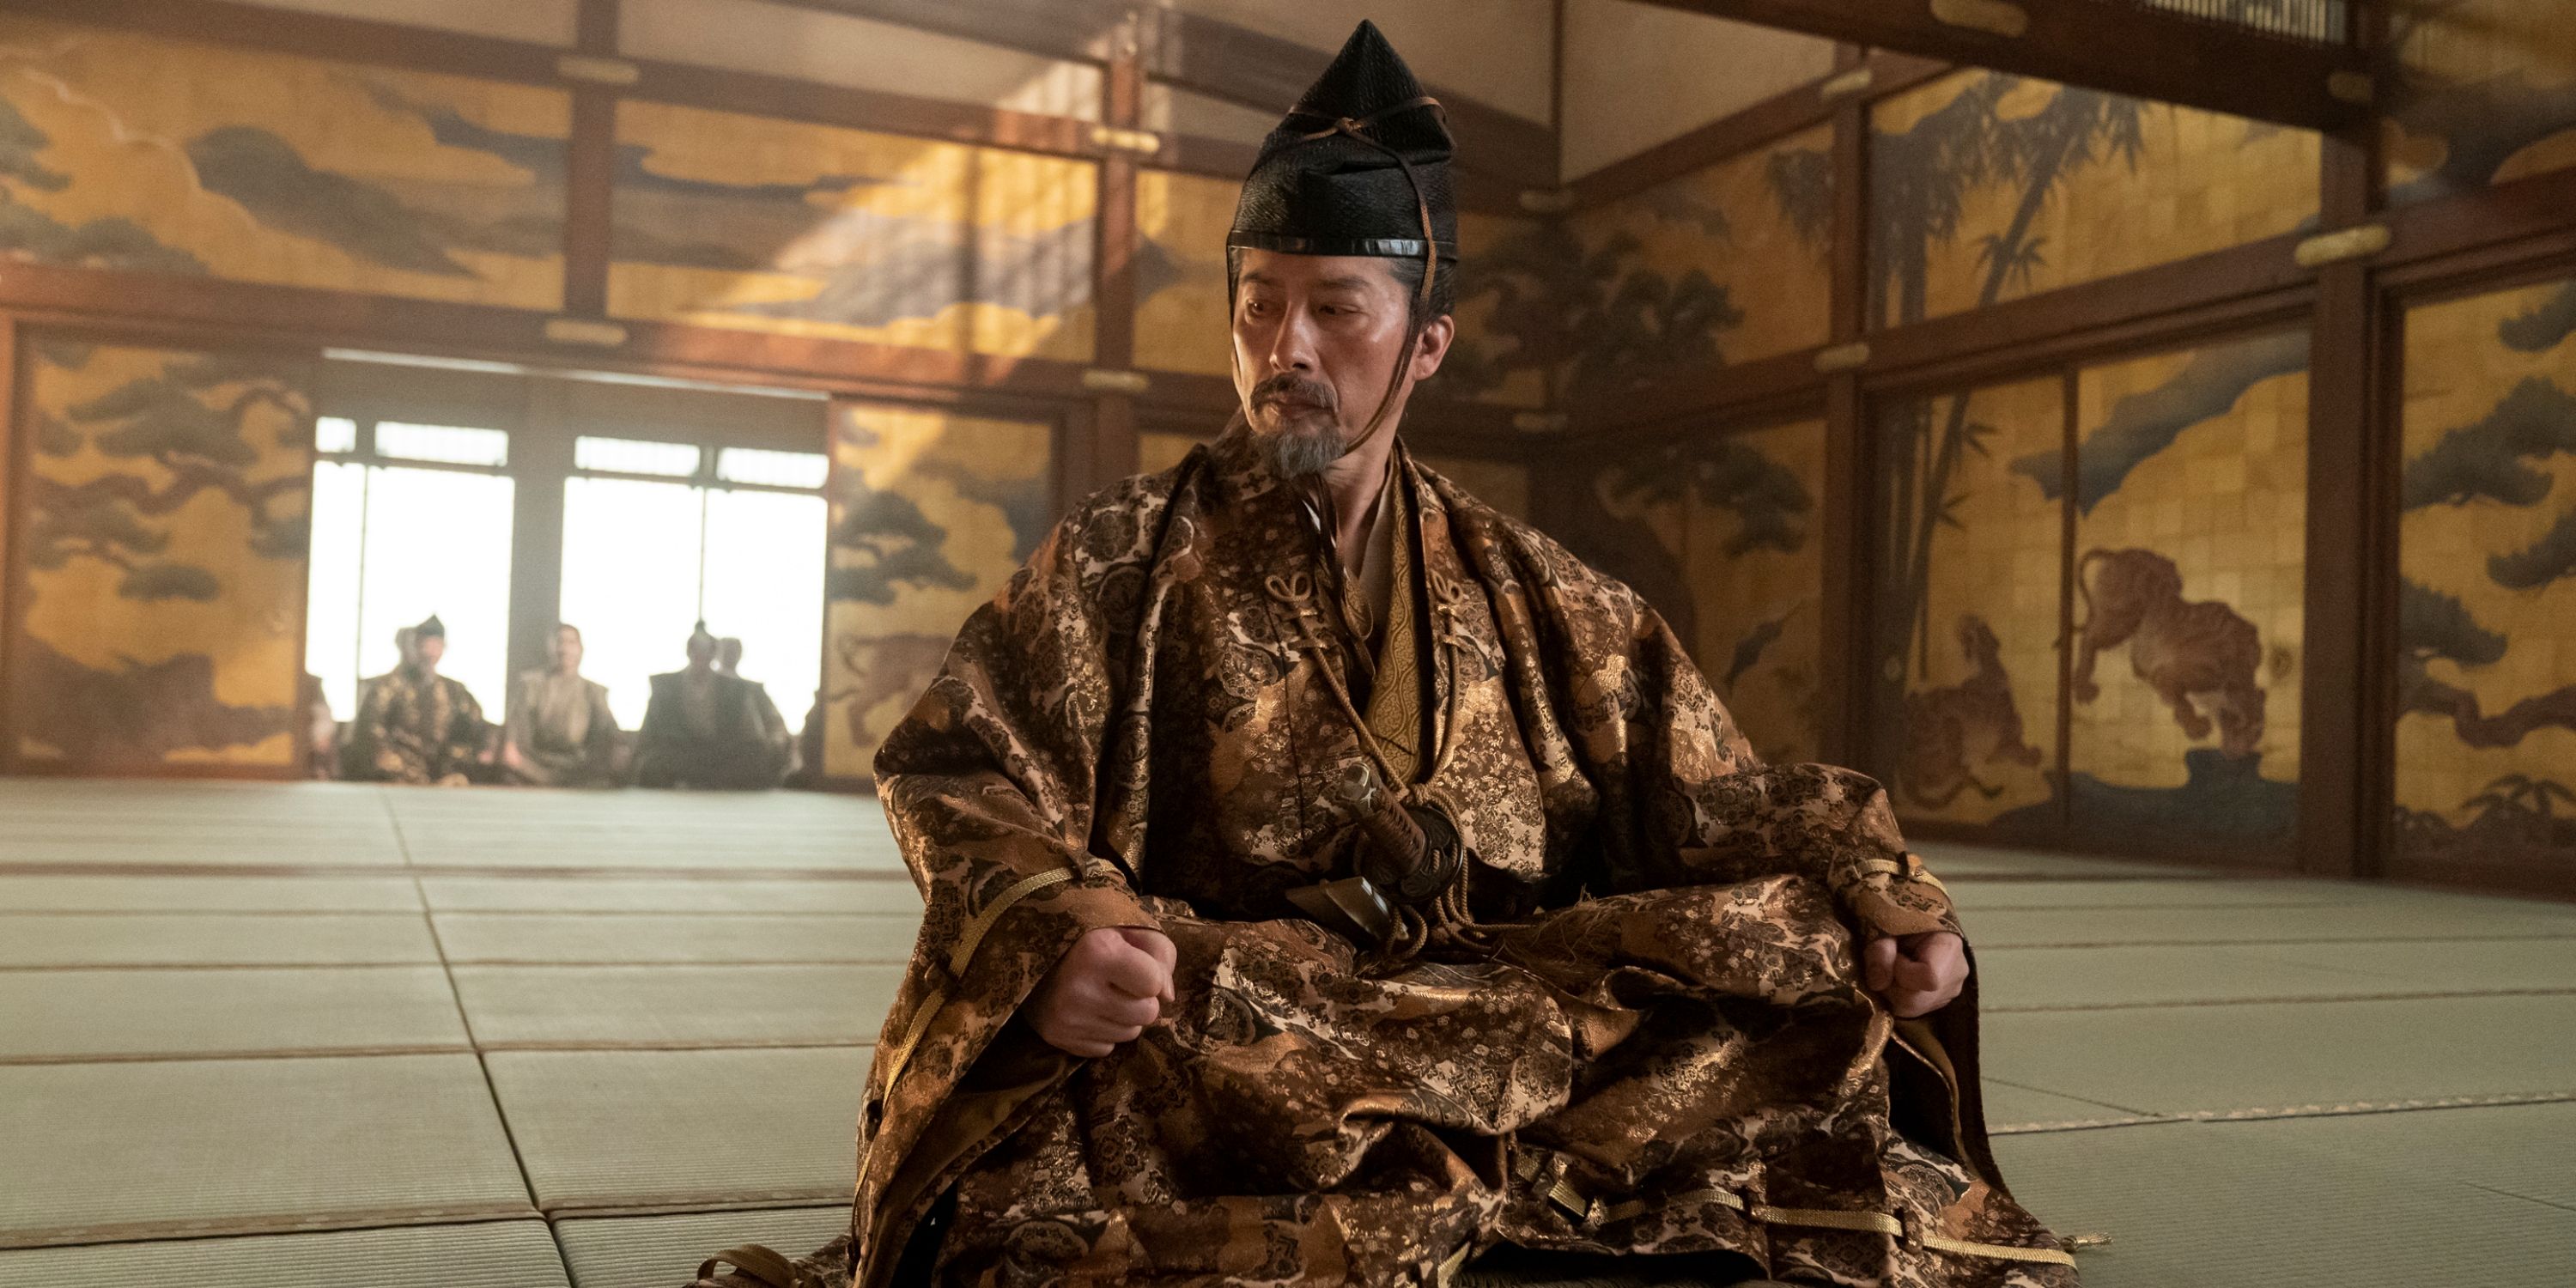 Hiroyuki Sanada as Lord Yoshii Toranaga in Episode 1 of Shogun